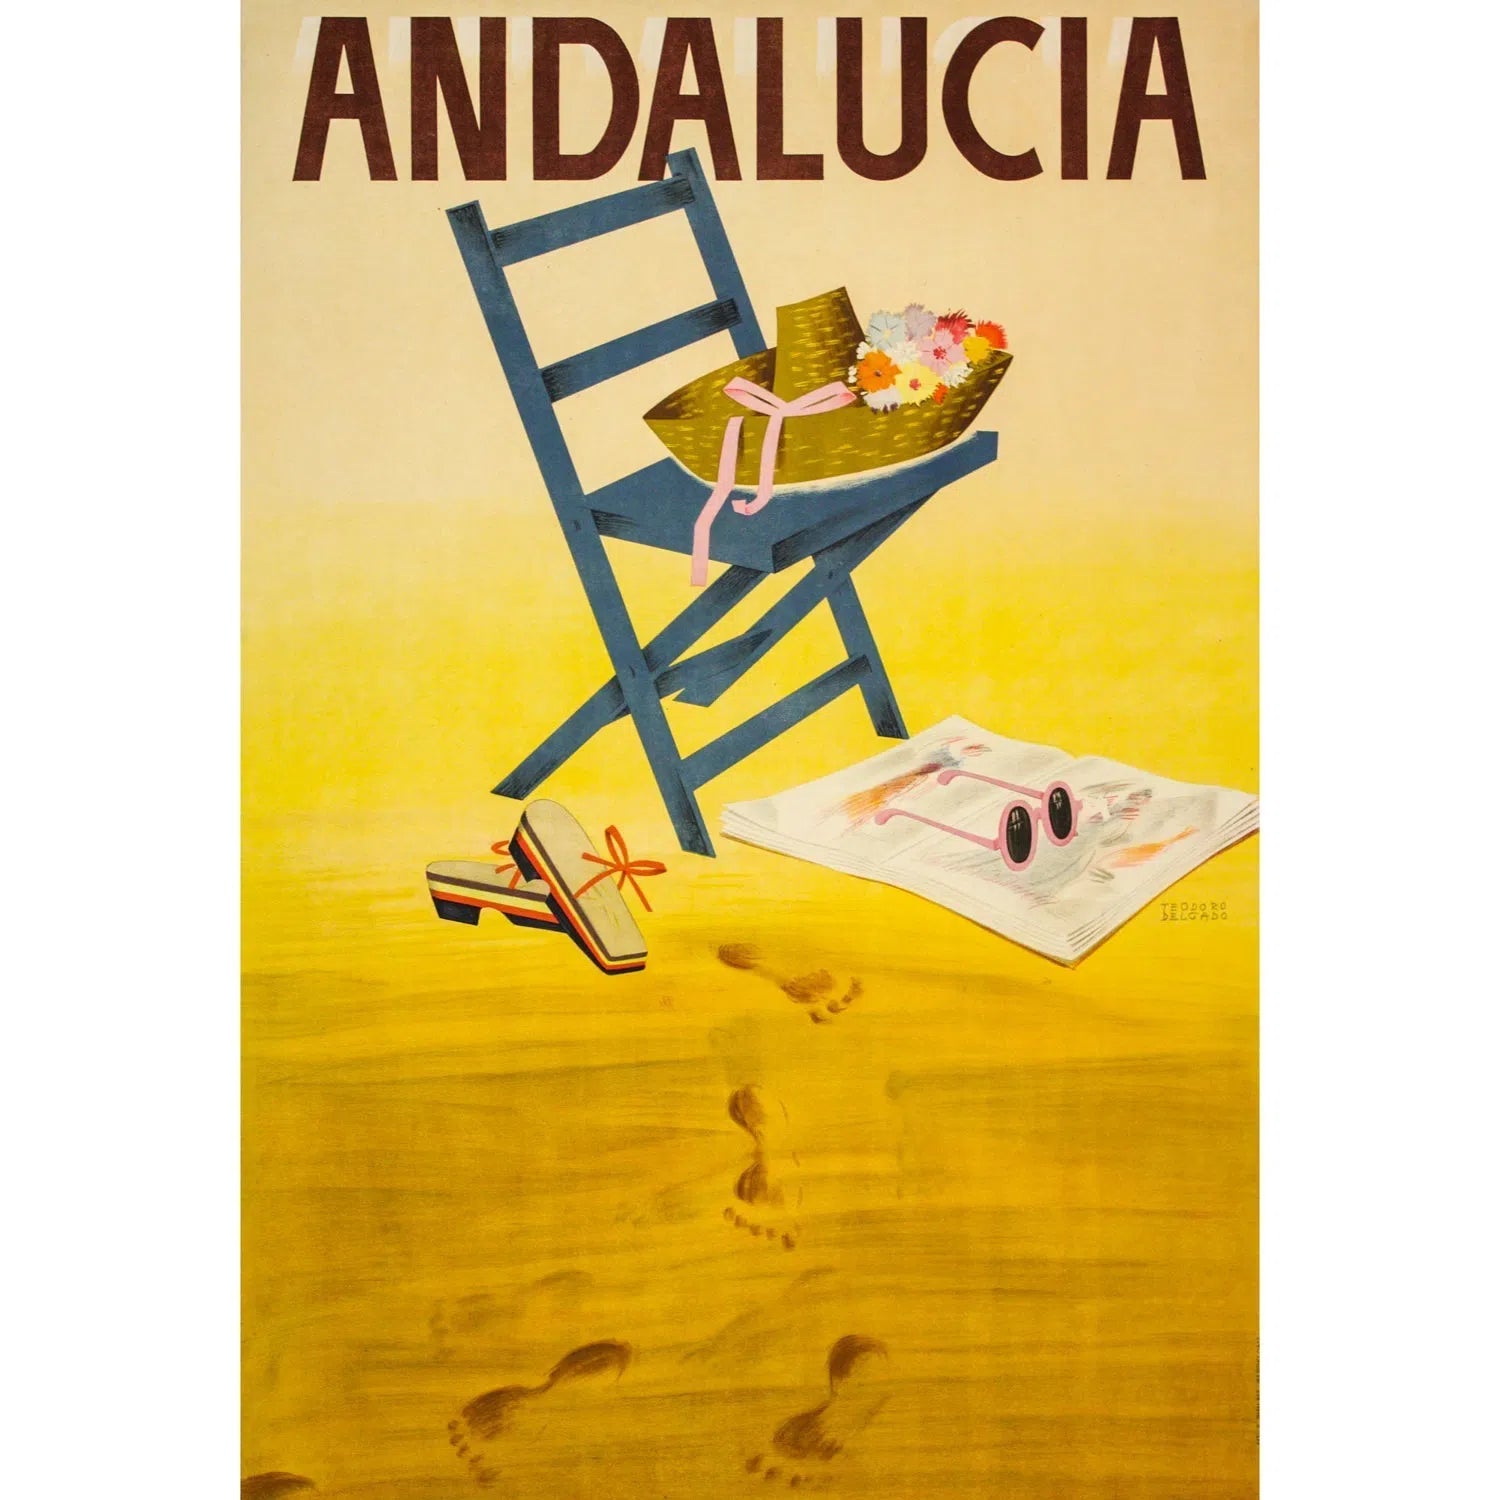 Andalucia-Imagesdartistes